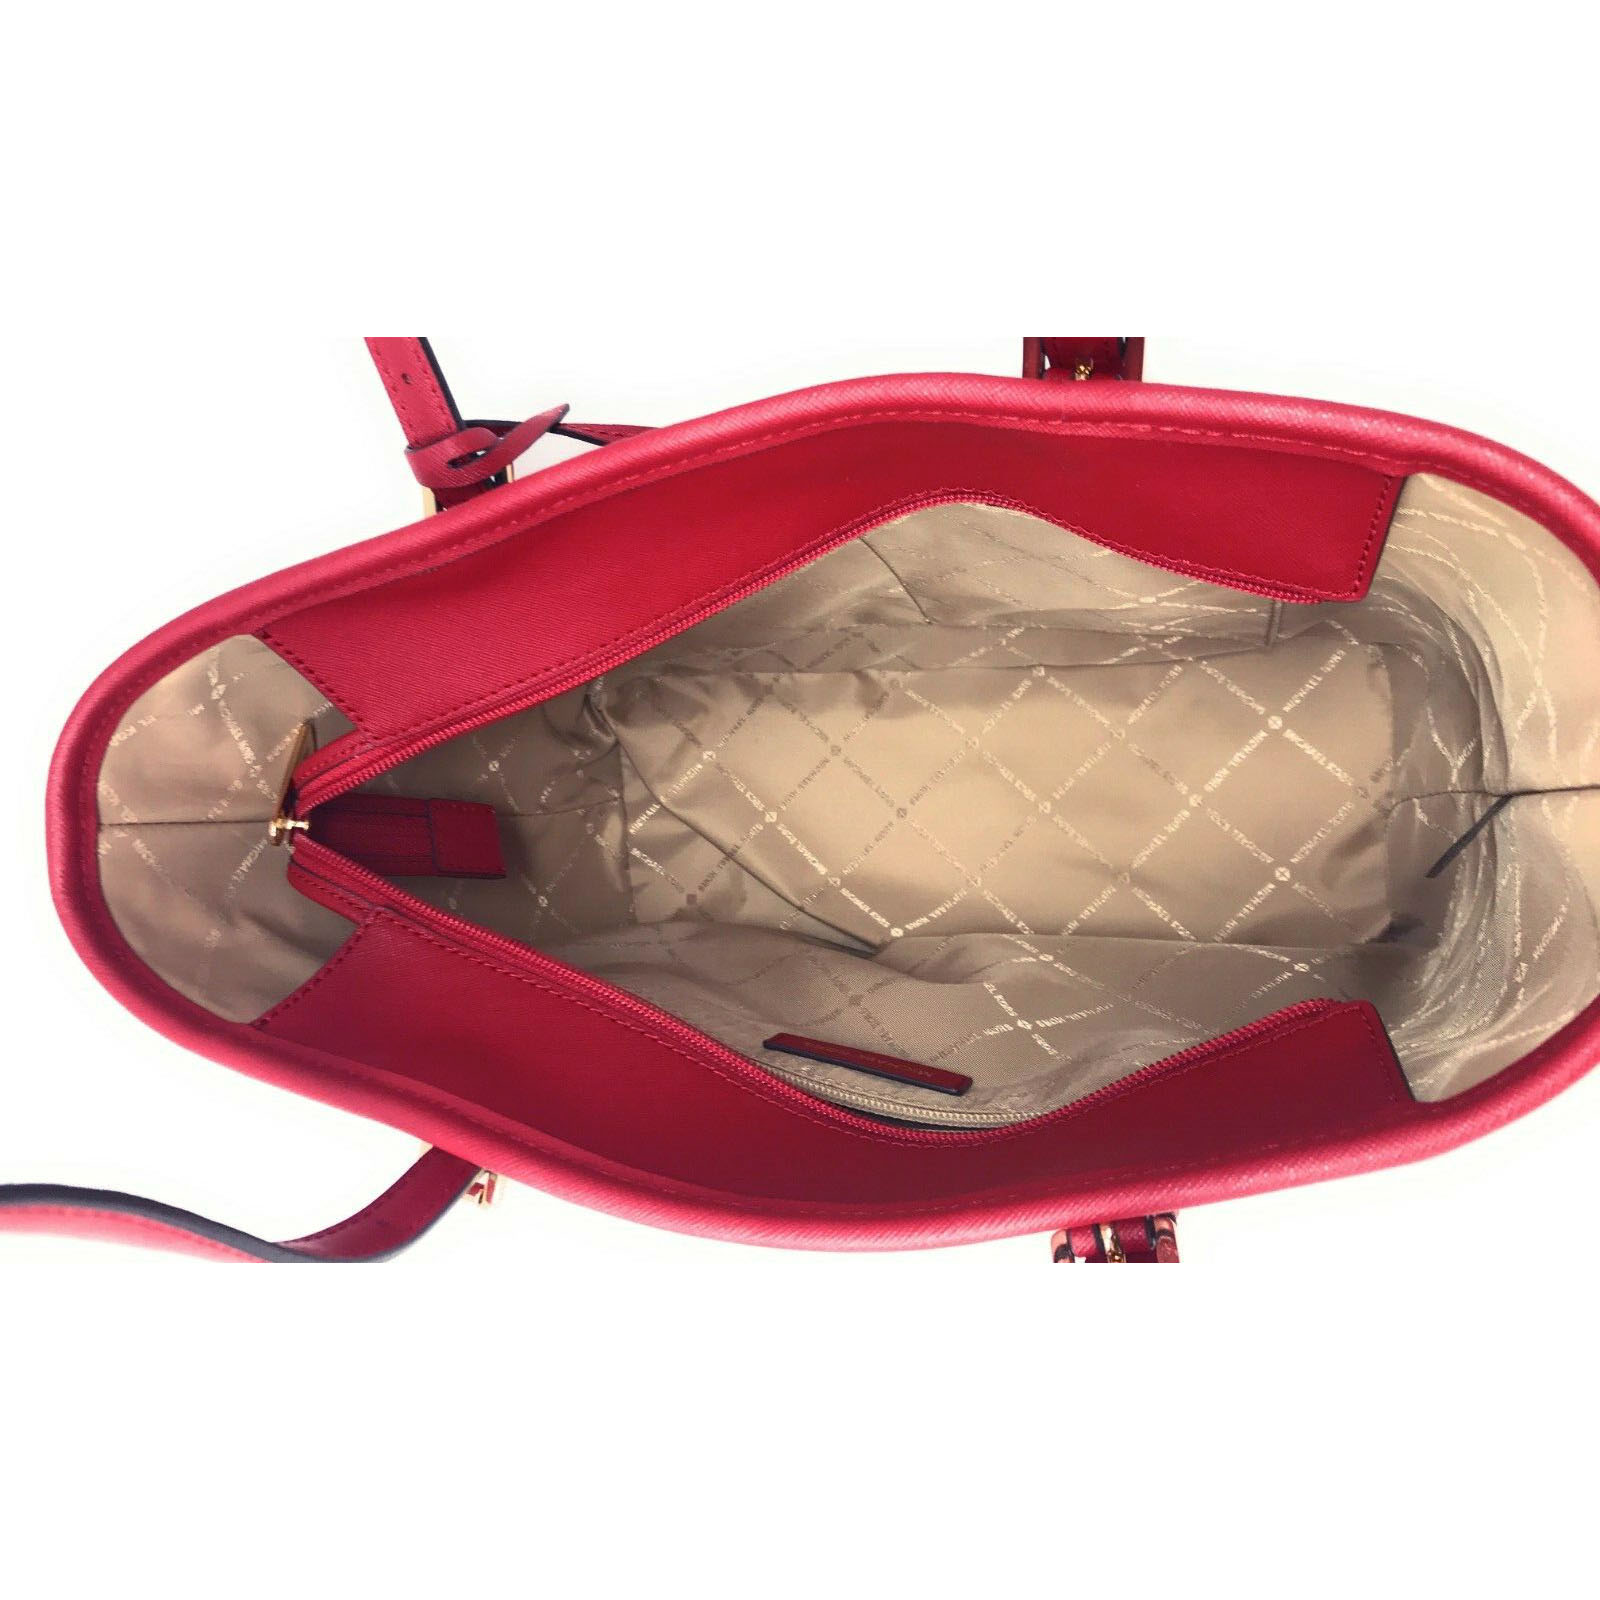 Michael Kors Tote With Gift Bag Jet Set Travel Small Zip Top Tote Shoulder Bag Scarlet Red # 35S0GTVT1L